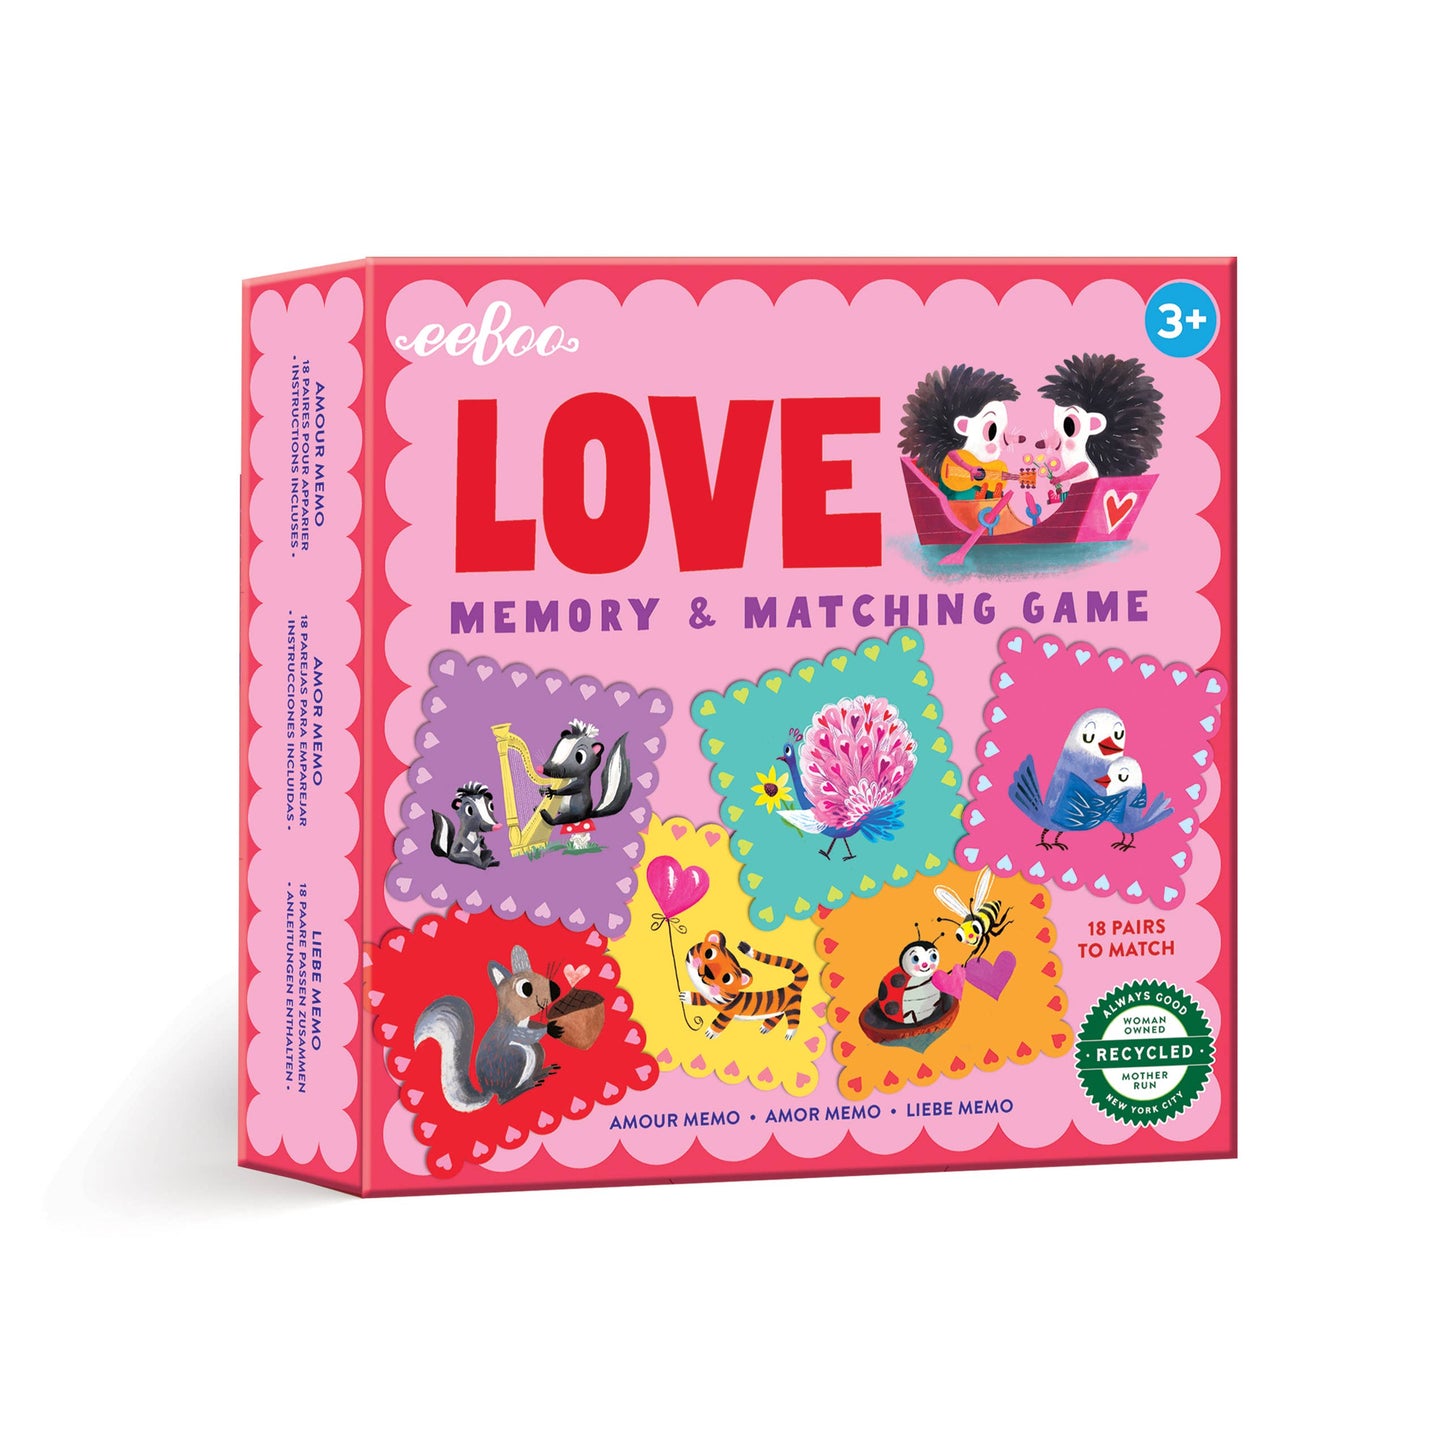 Valentine Love Little Square Memory Game